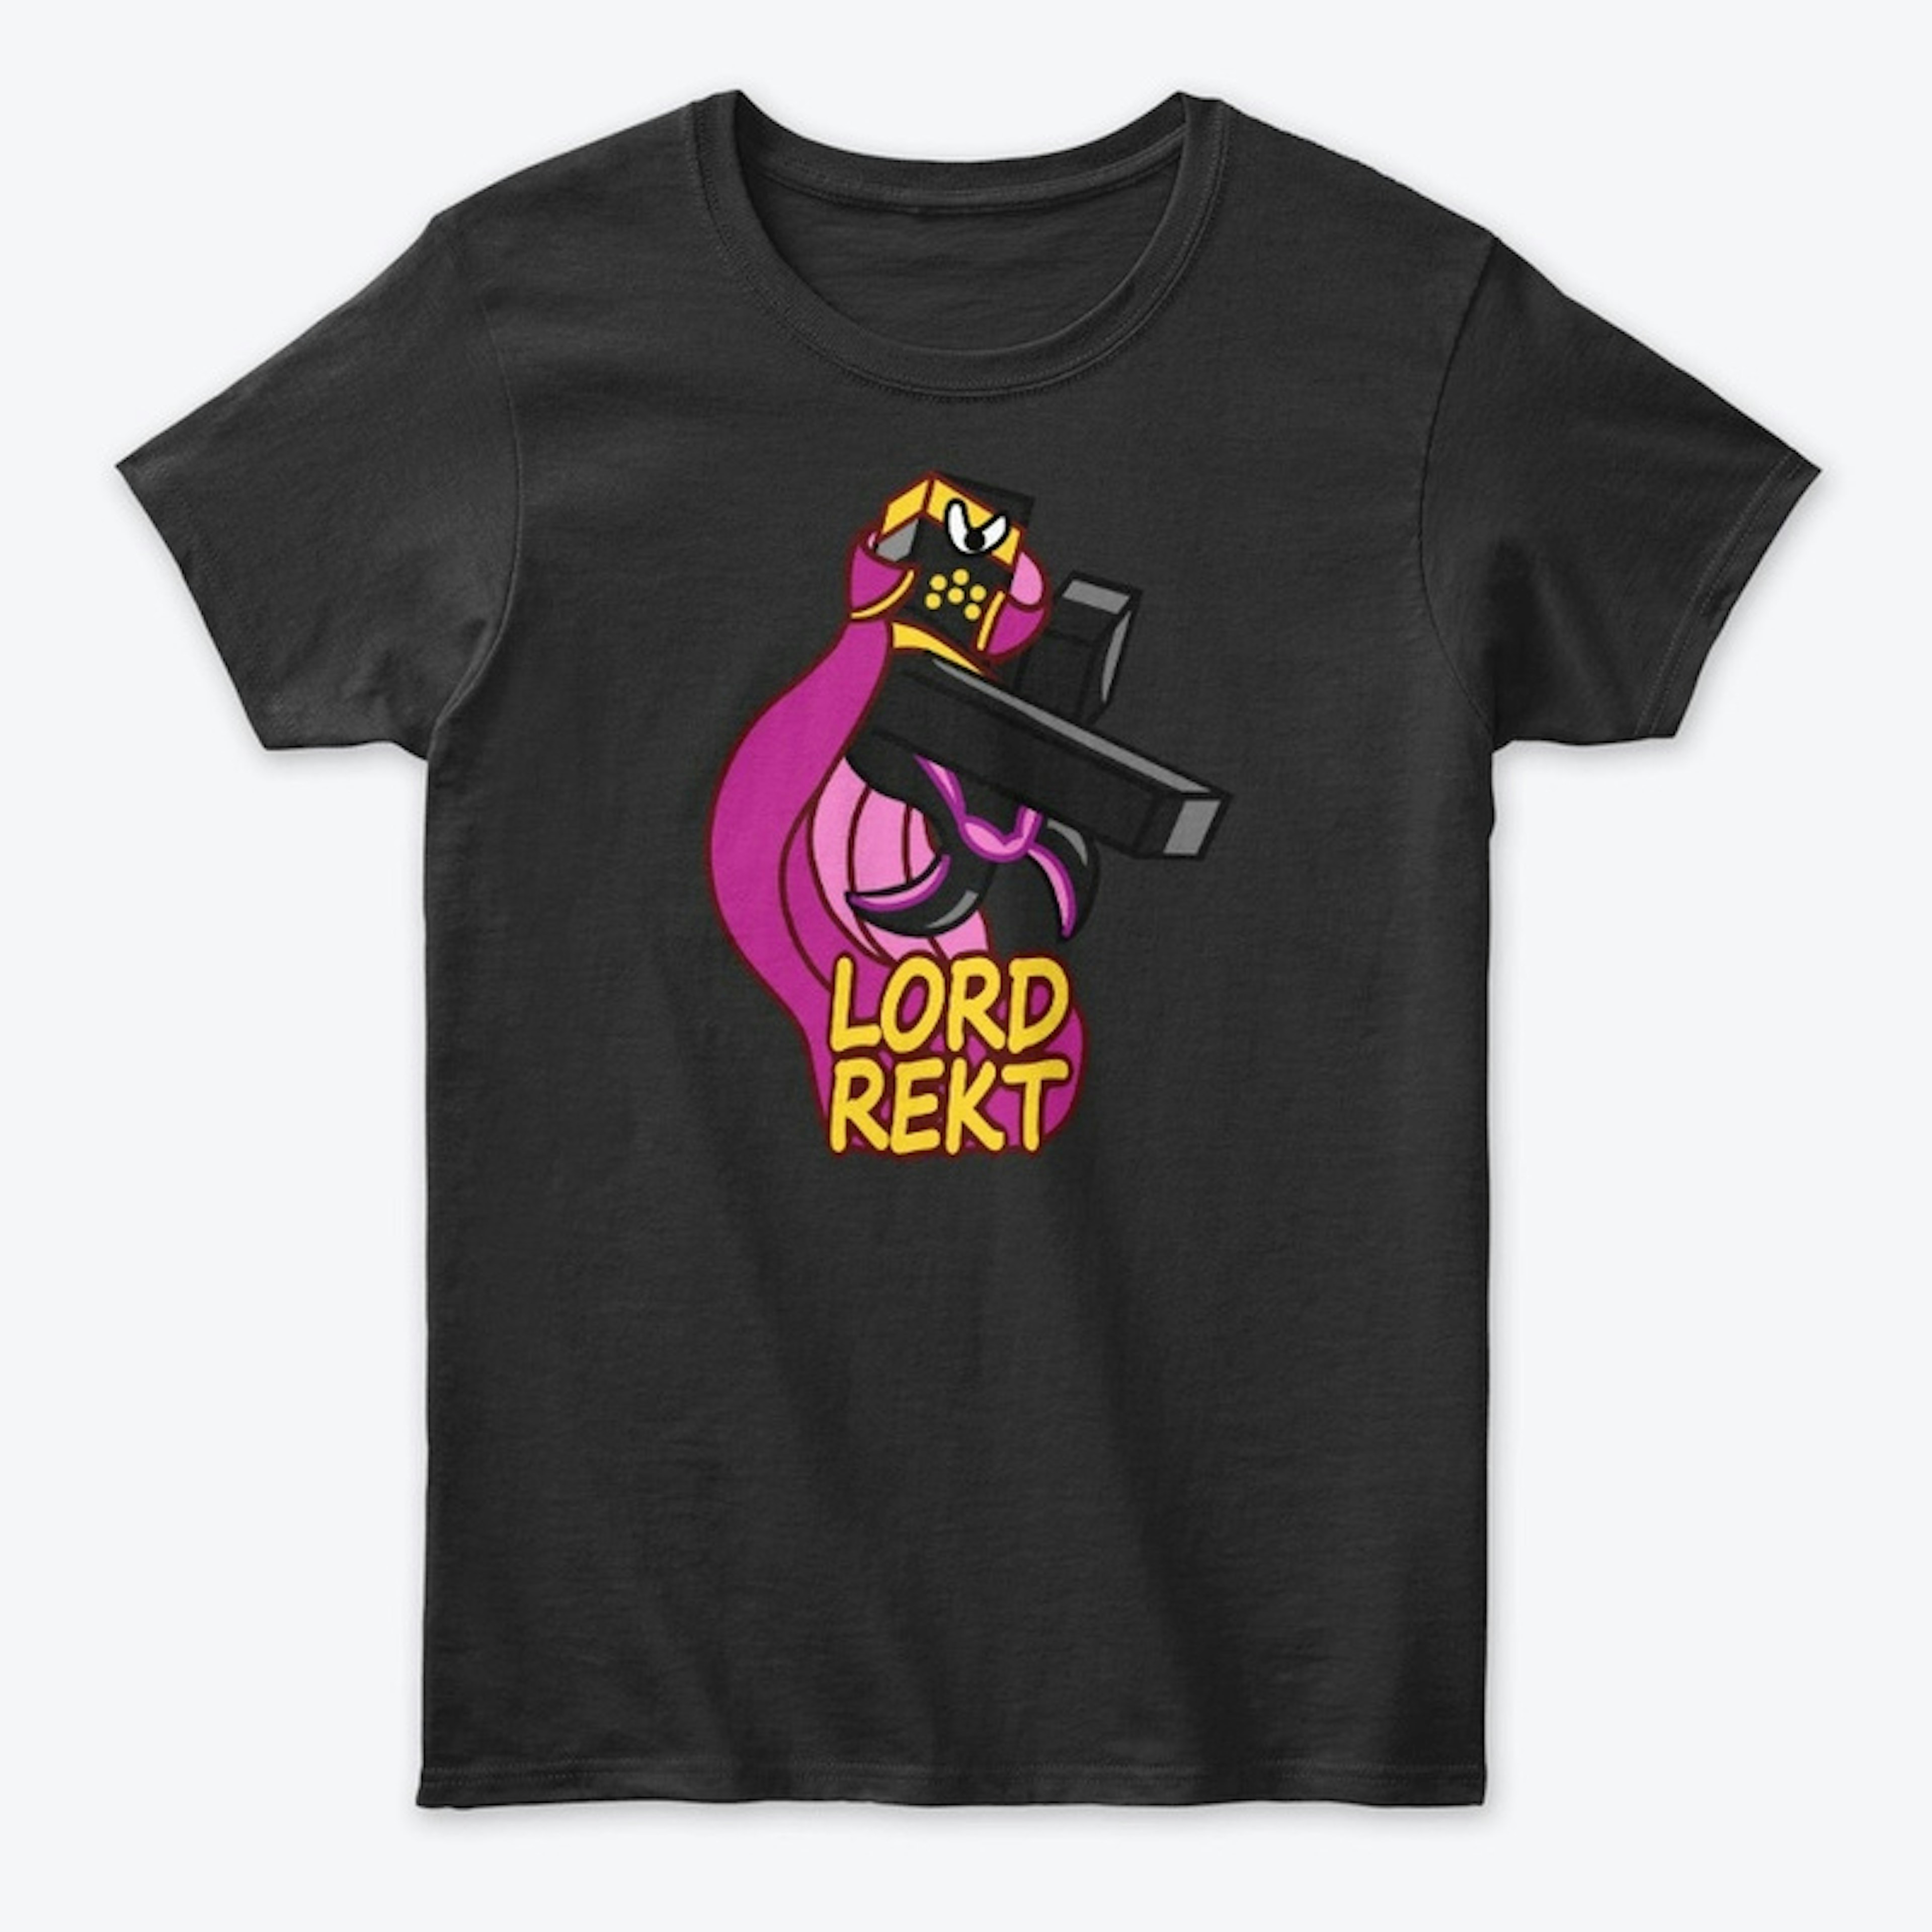 Lord Rekt Shirt + Logo on back